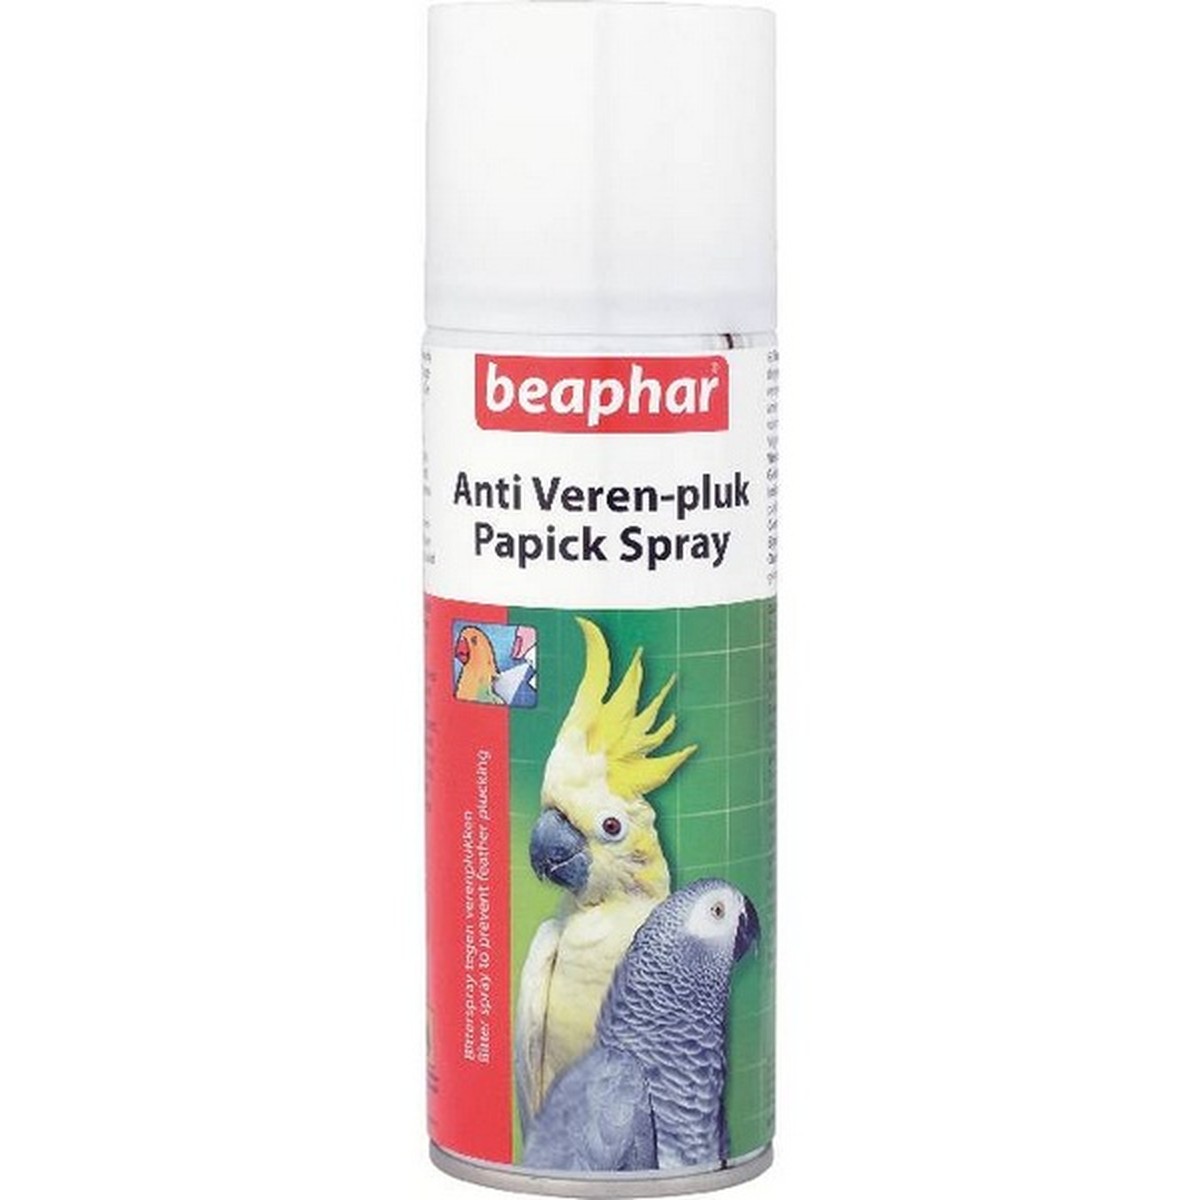   Papick Spray. 200 ml  200ml